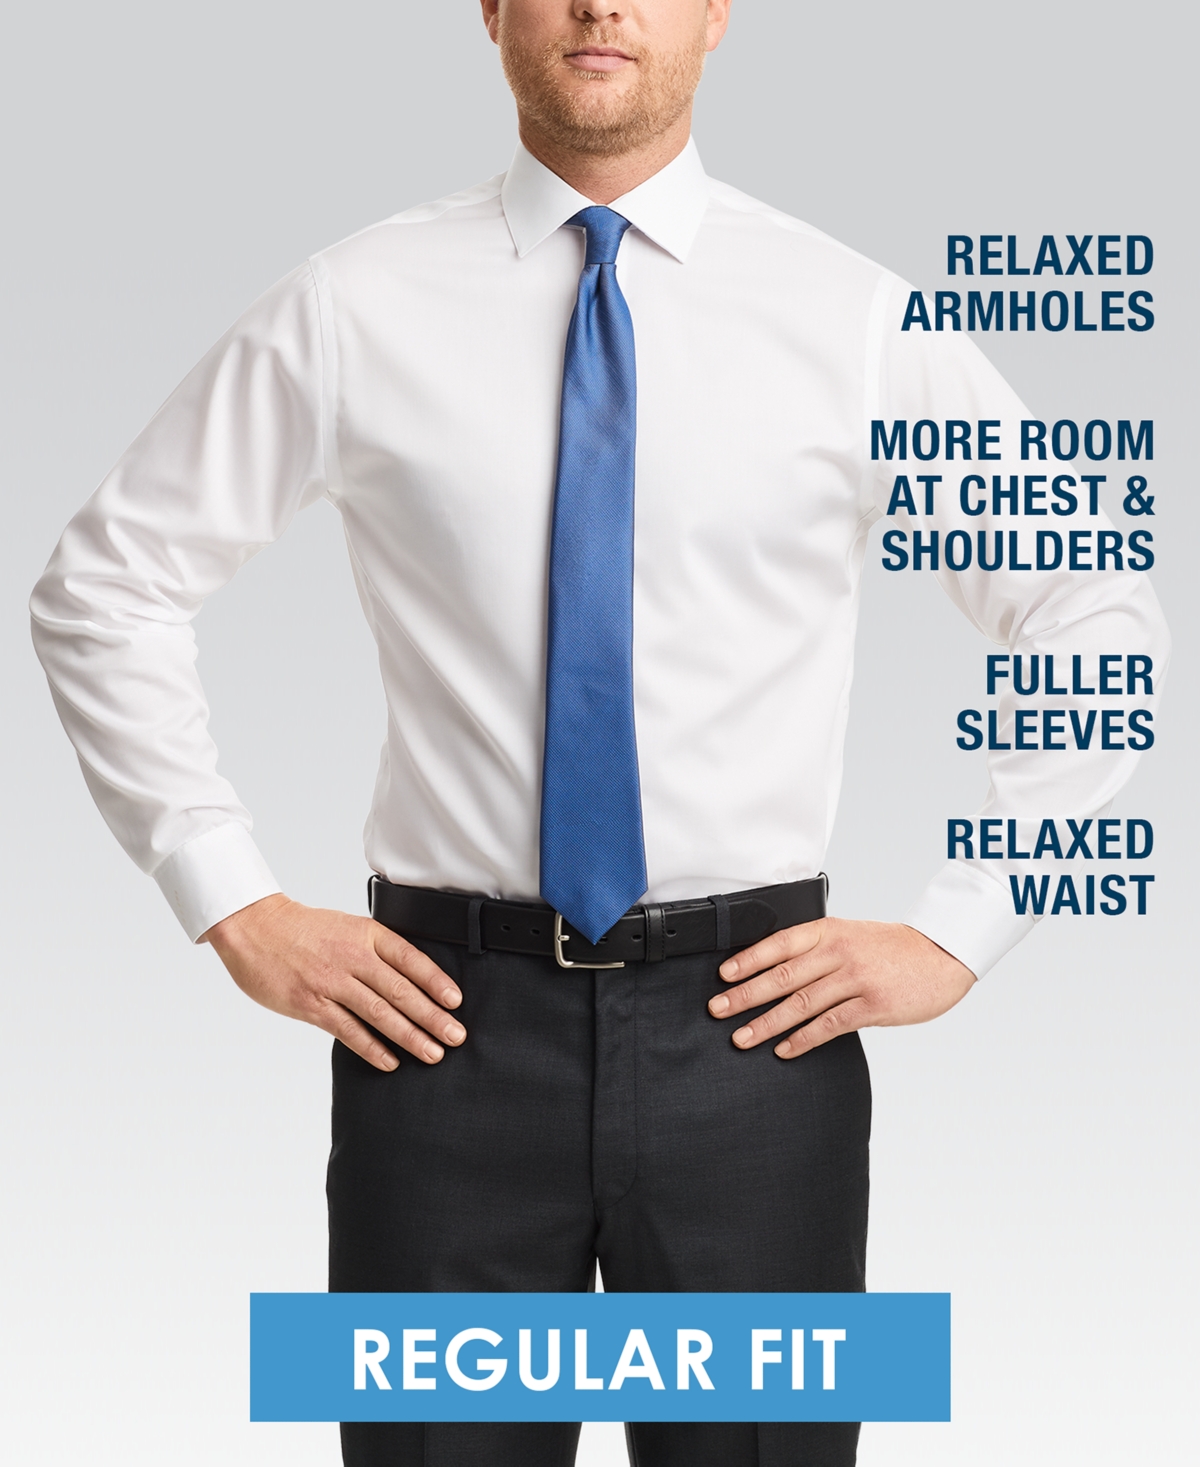 Shop Van Heusen Men's Big & Tall Classic/regular Fit Wrinkle Free Poplin Solid Dress Shirt In Grey